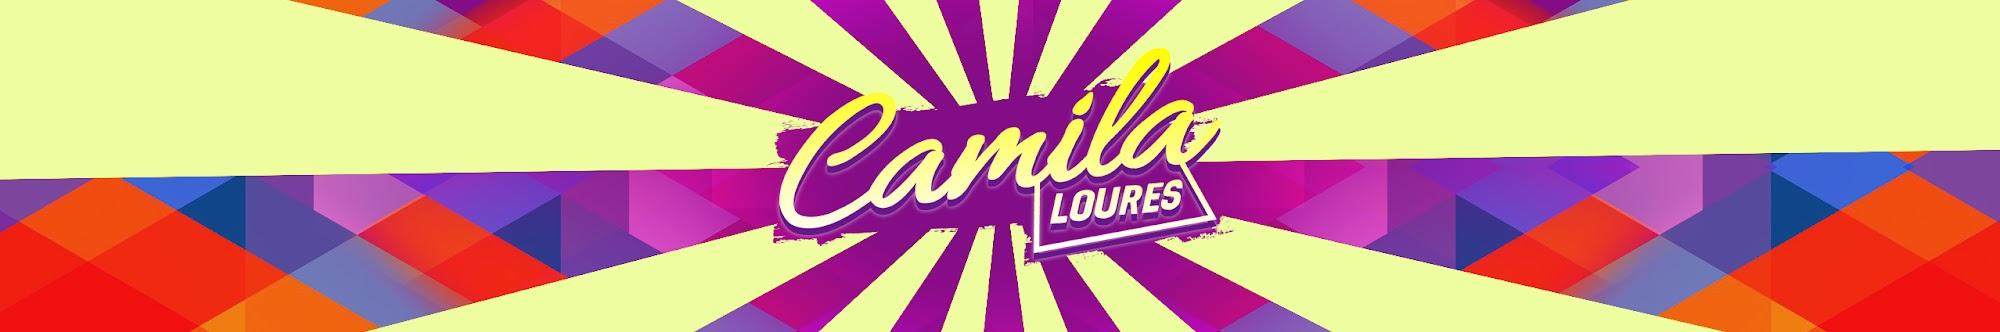 Camila Loures